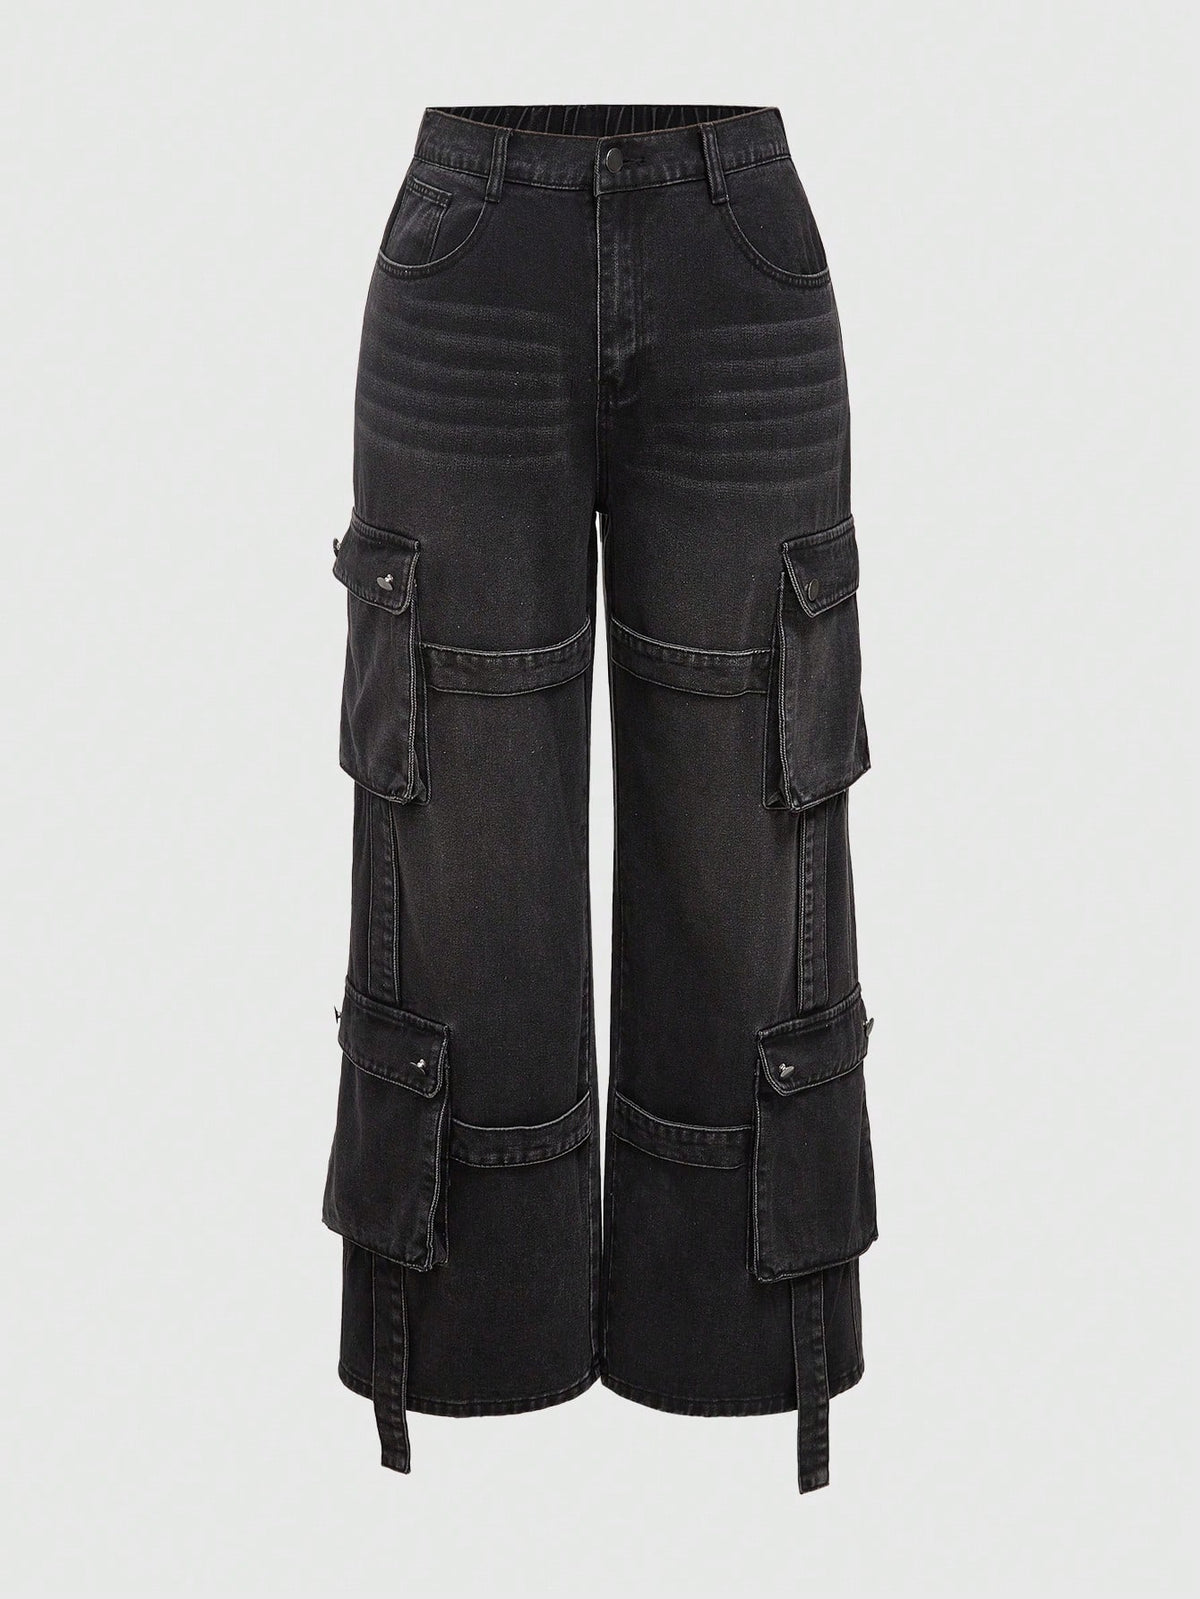 ROMWE Grunge Punk Plus Size Women's Punk Style Streetwear Super Heavy Duty Cargo Pockets Relaxed Fit Straight Leg Black/Gray Washed Denim Pants